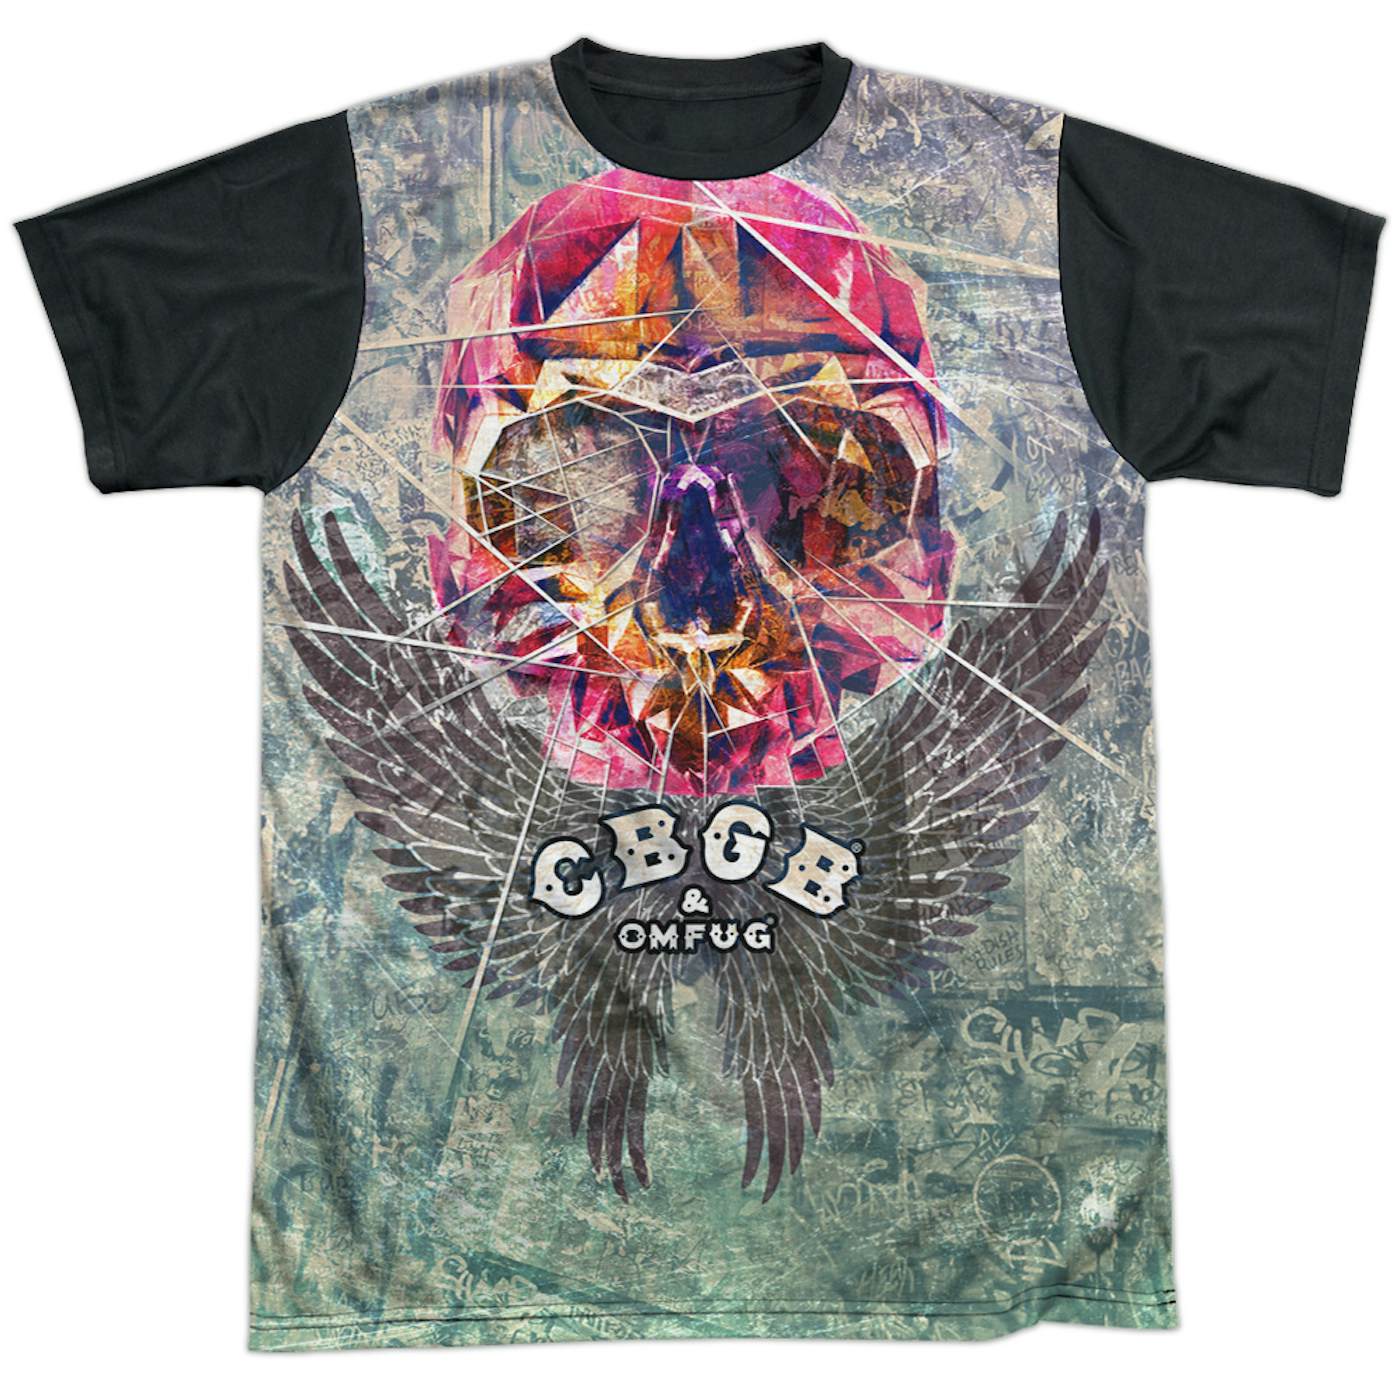 Cbgb Tee | GRAFFITI SKULL Shirt